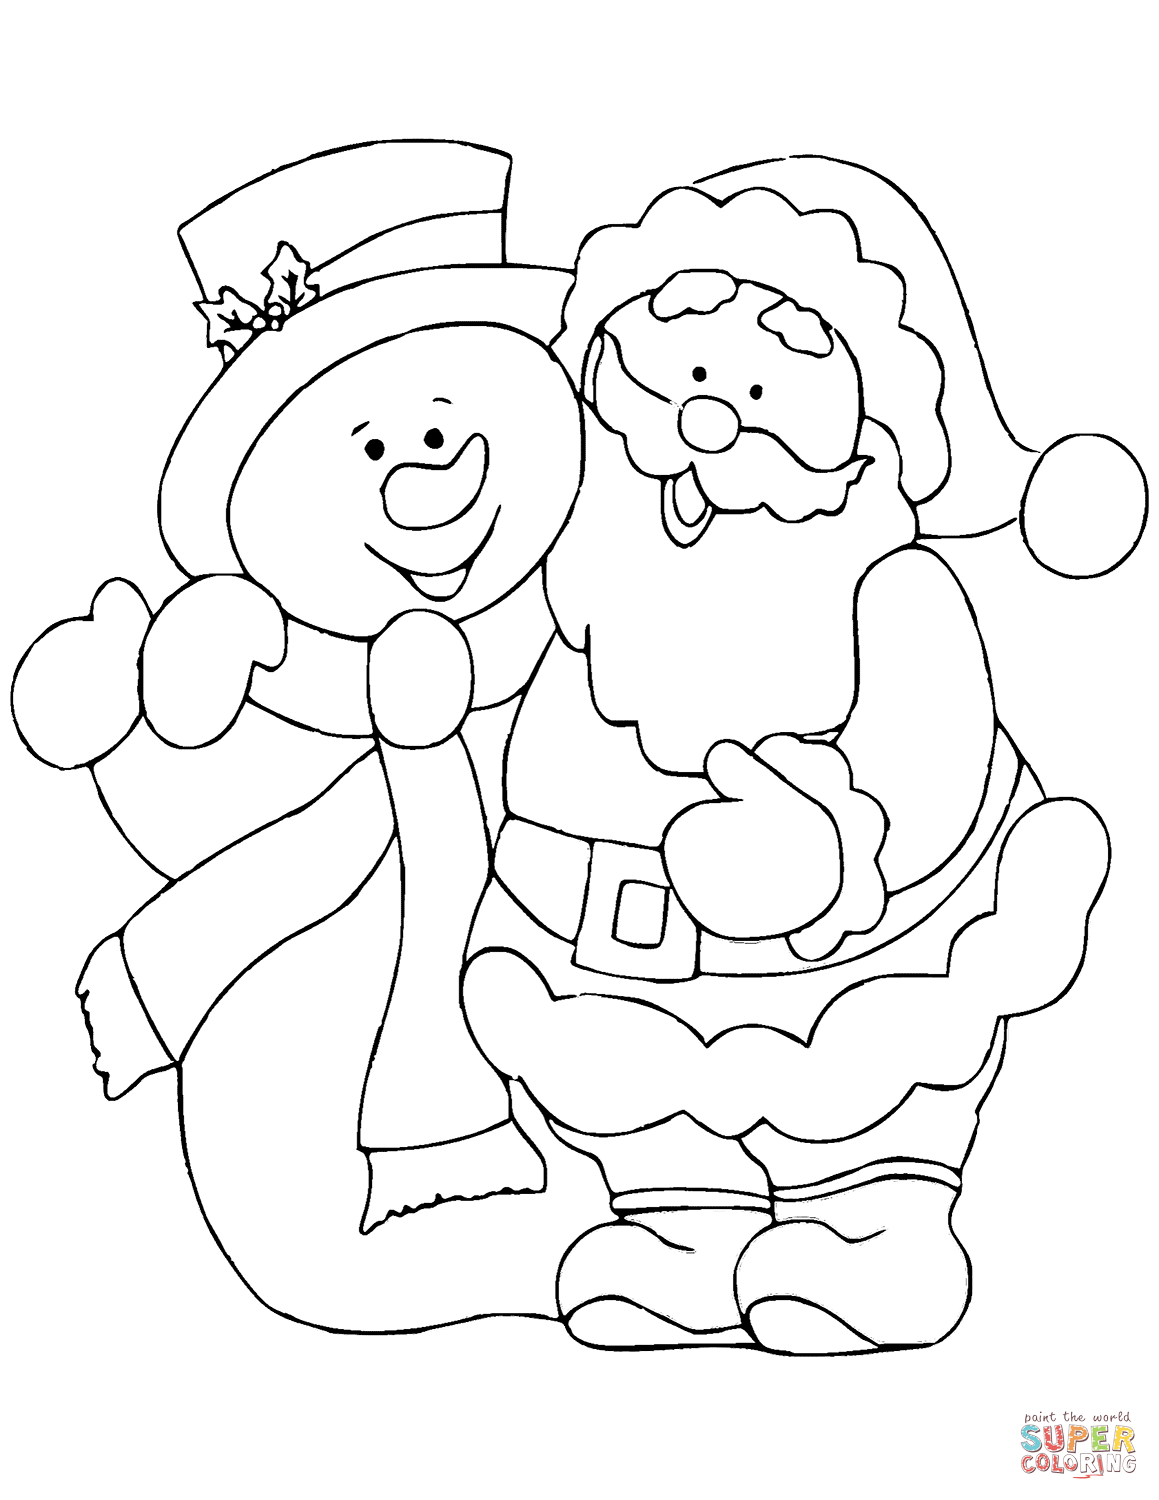 Coloring Pages Santa Santa Claus With Snowman Coloring Page Free Printable Coloring Pages